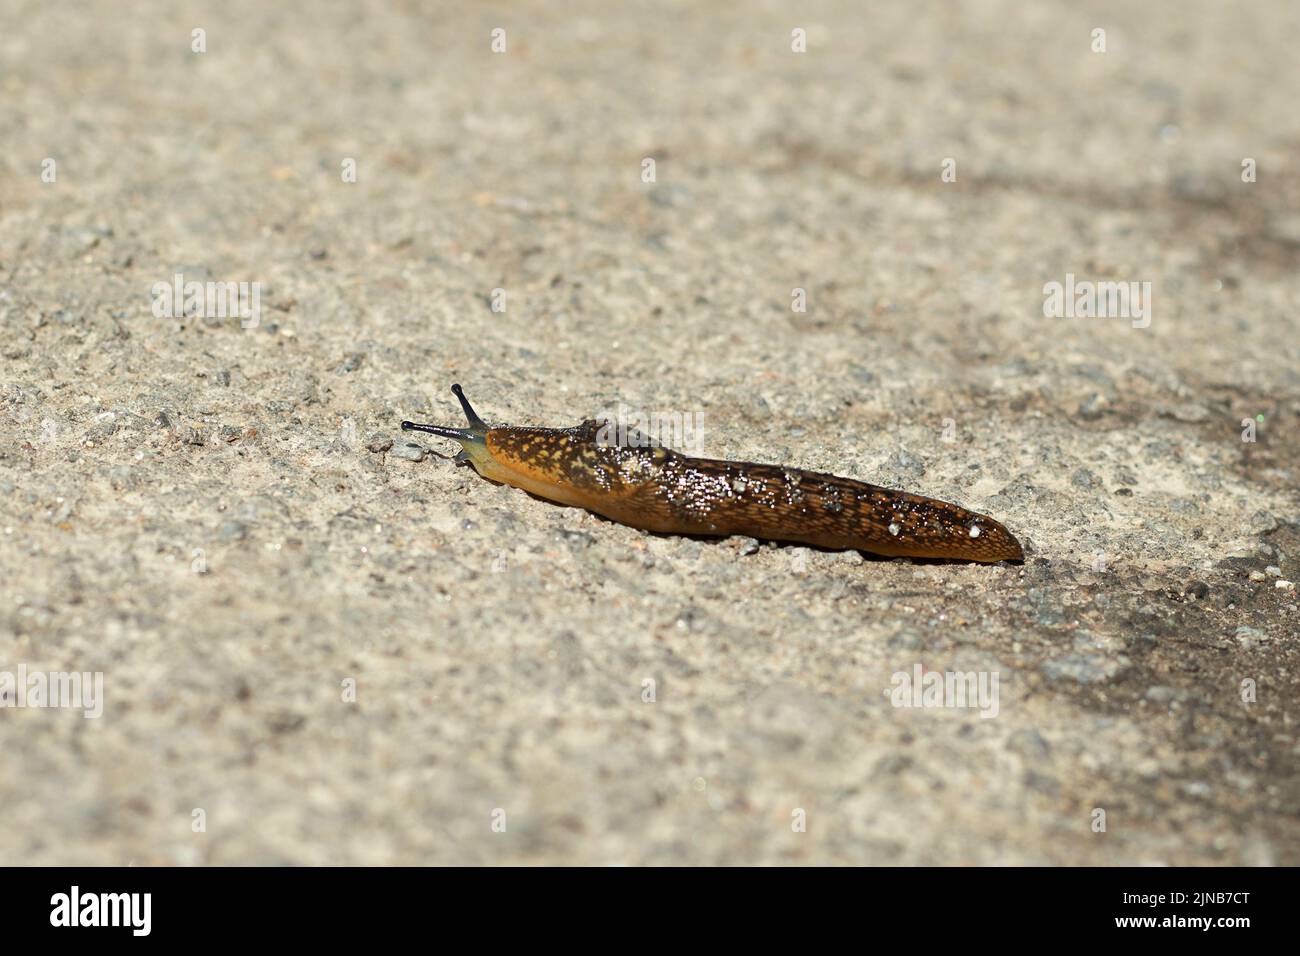 A large slug crawls along the asphalt, close-up. Large snail without shell. Selective focus. Stock Photo